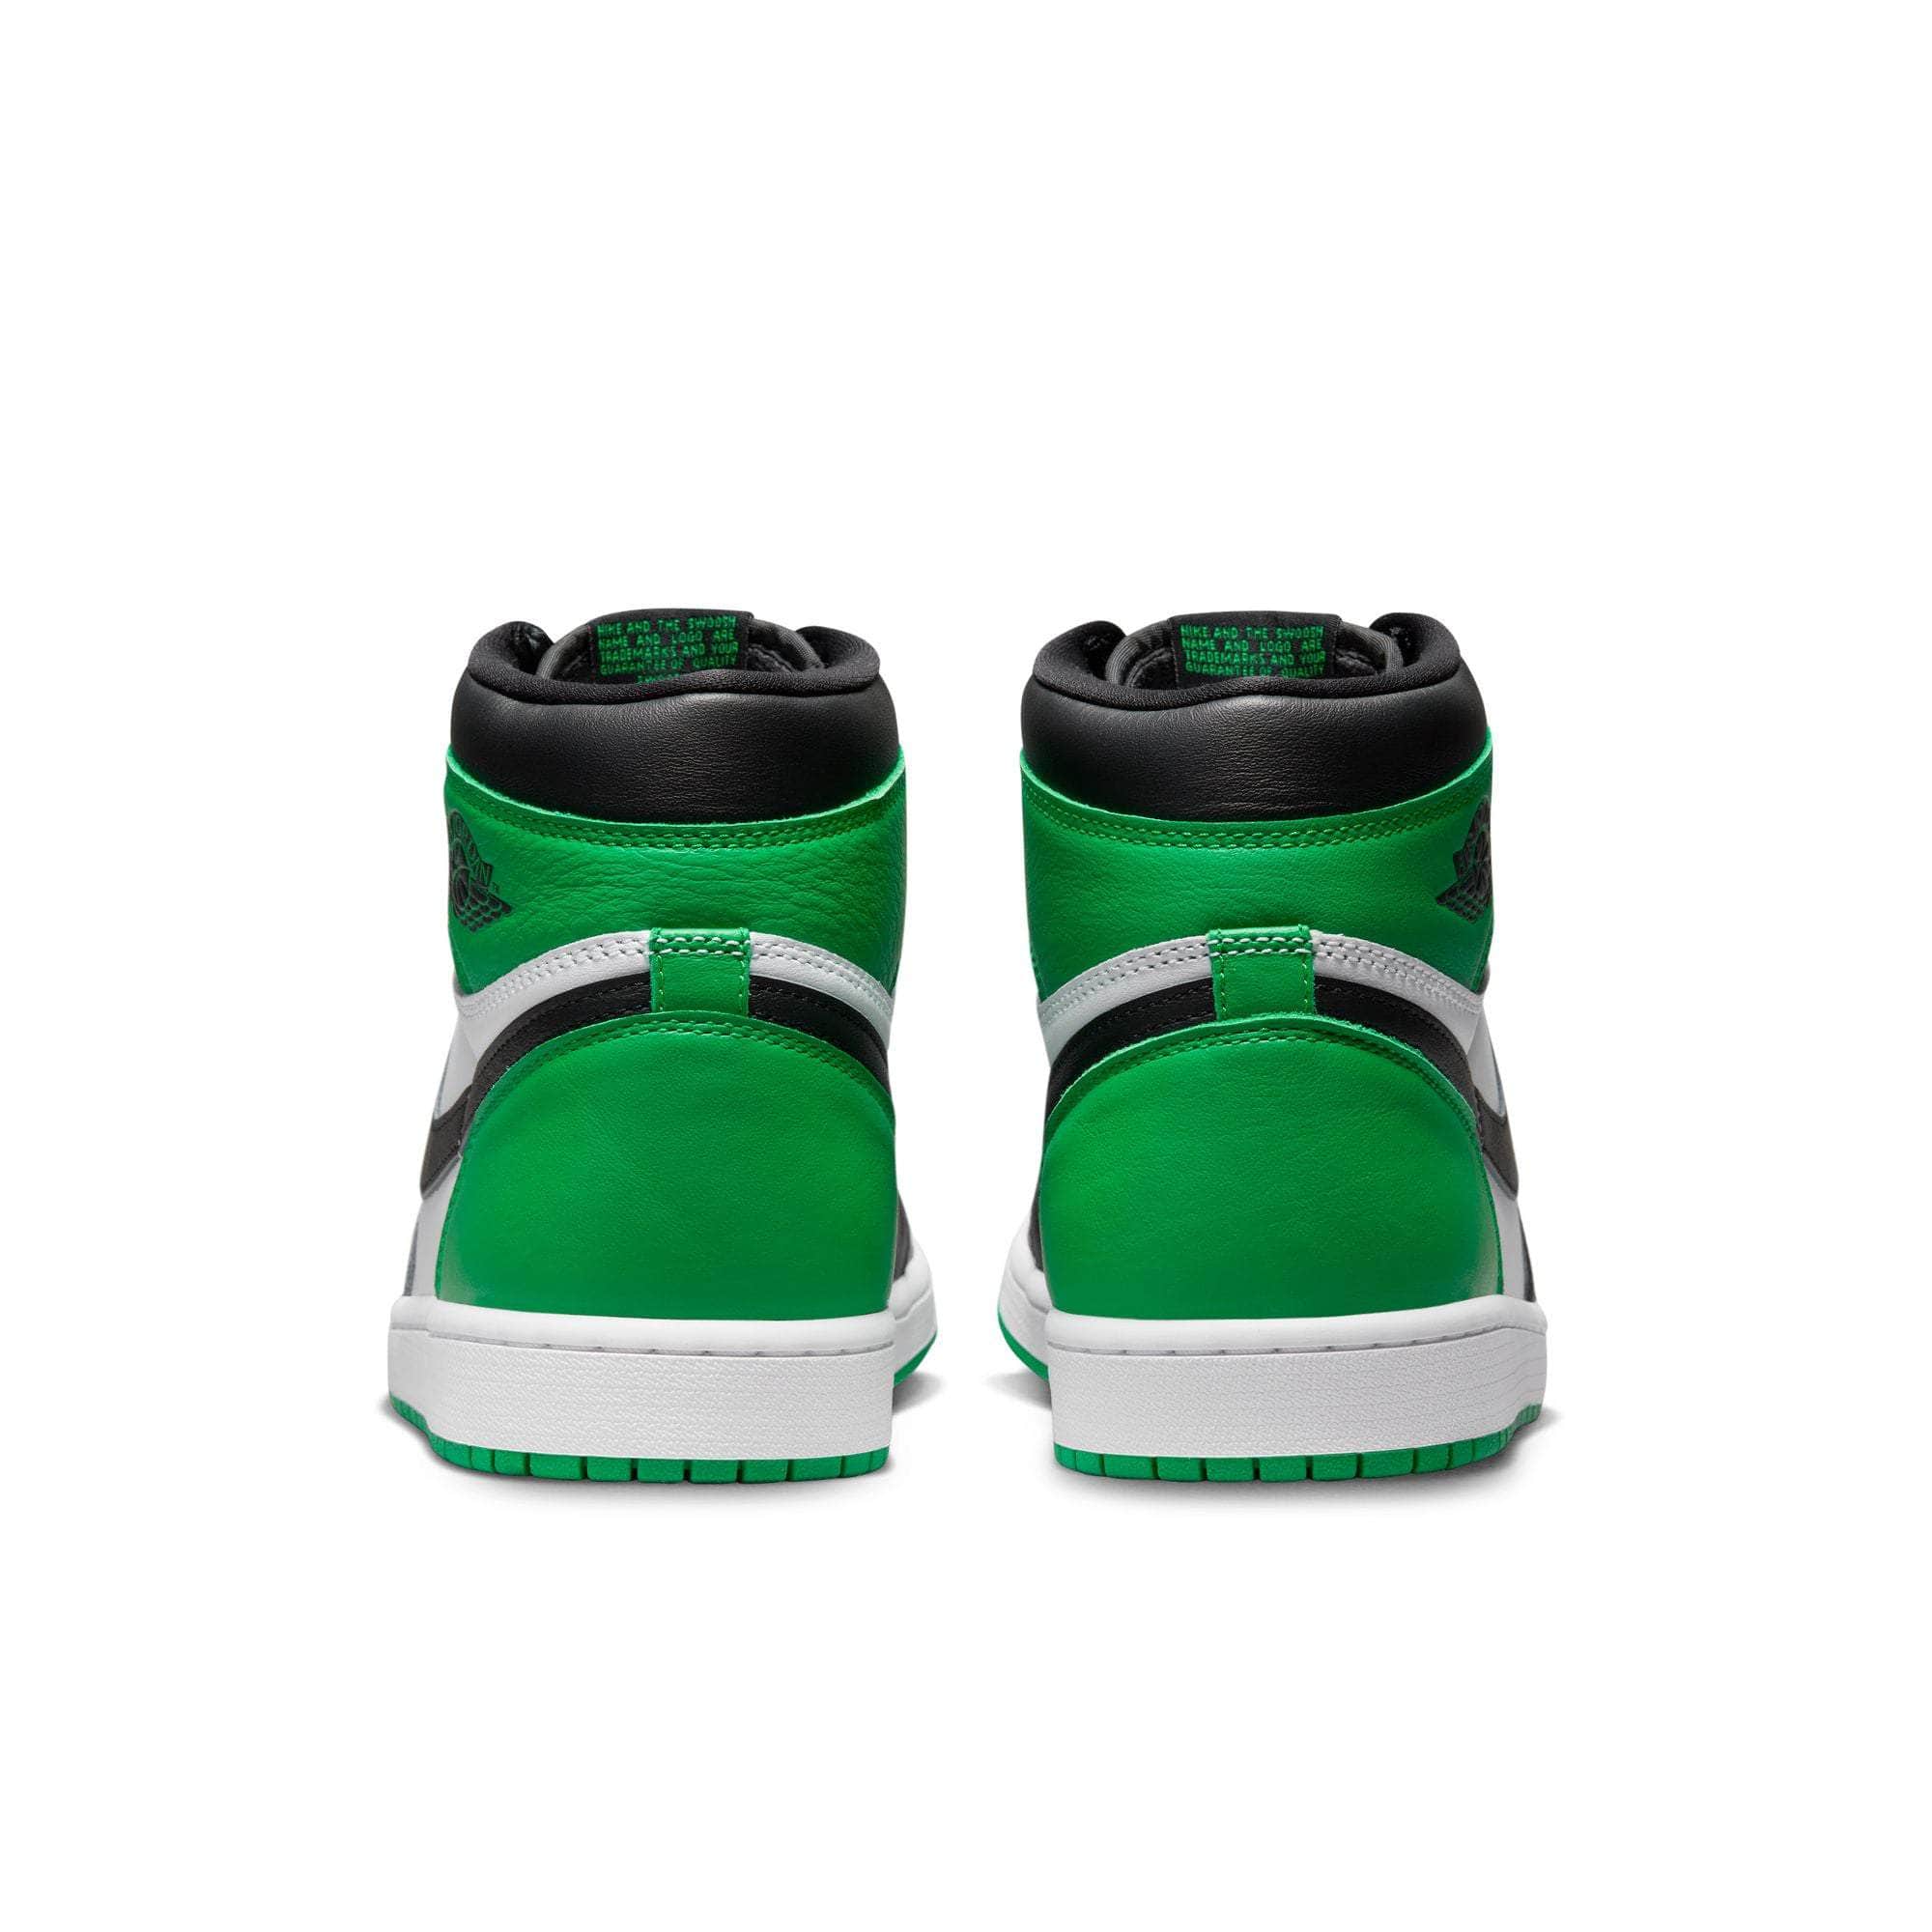 Air Jordan FOOTWEAR Air Jordan 1 Retro High OG "Lucky Green" - Men's